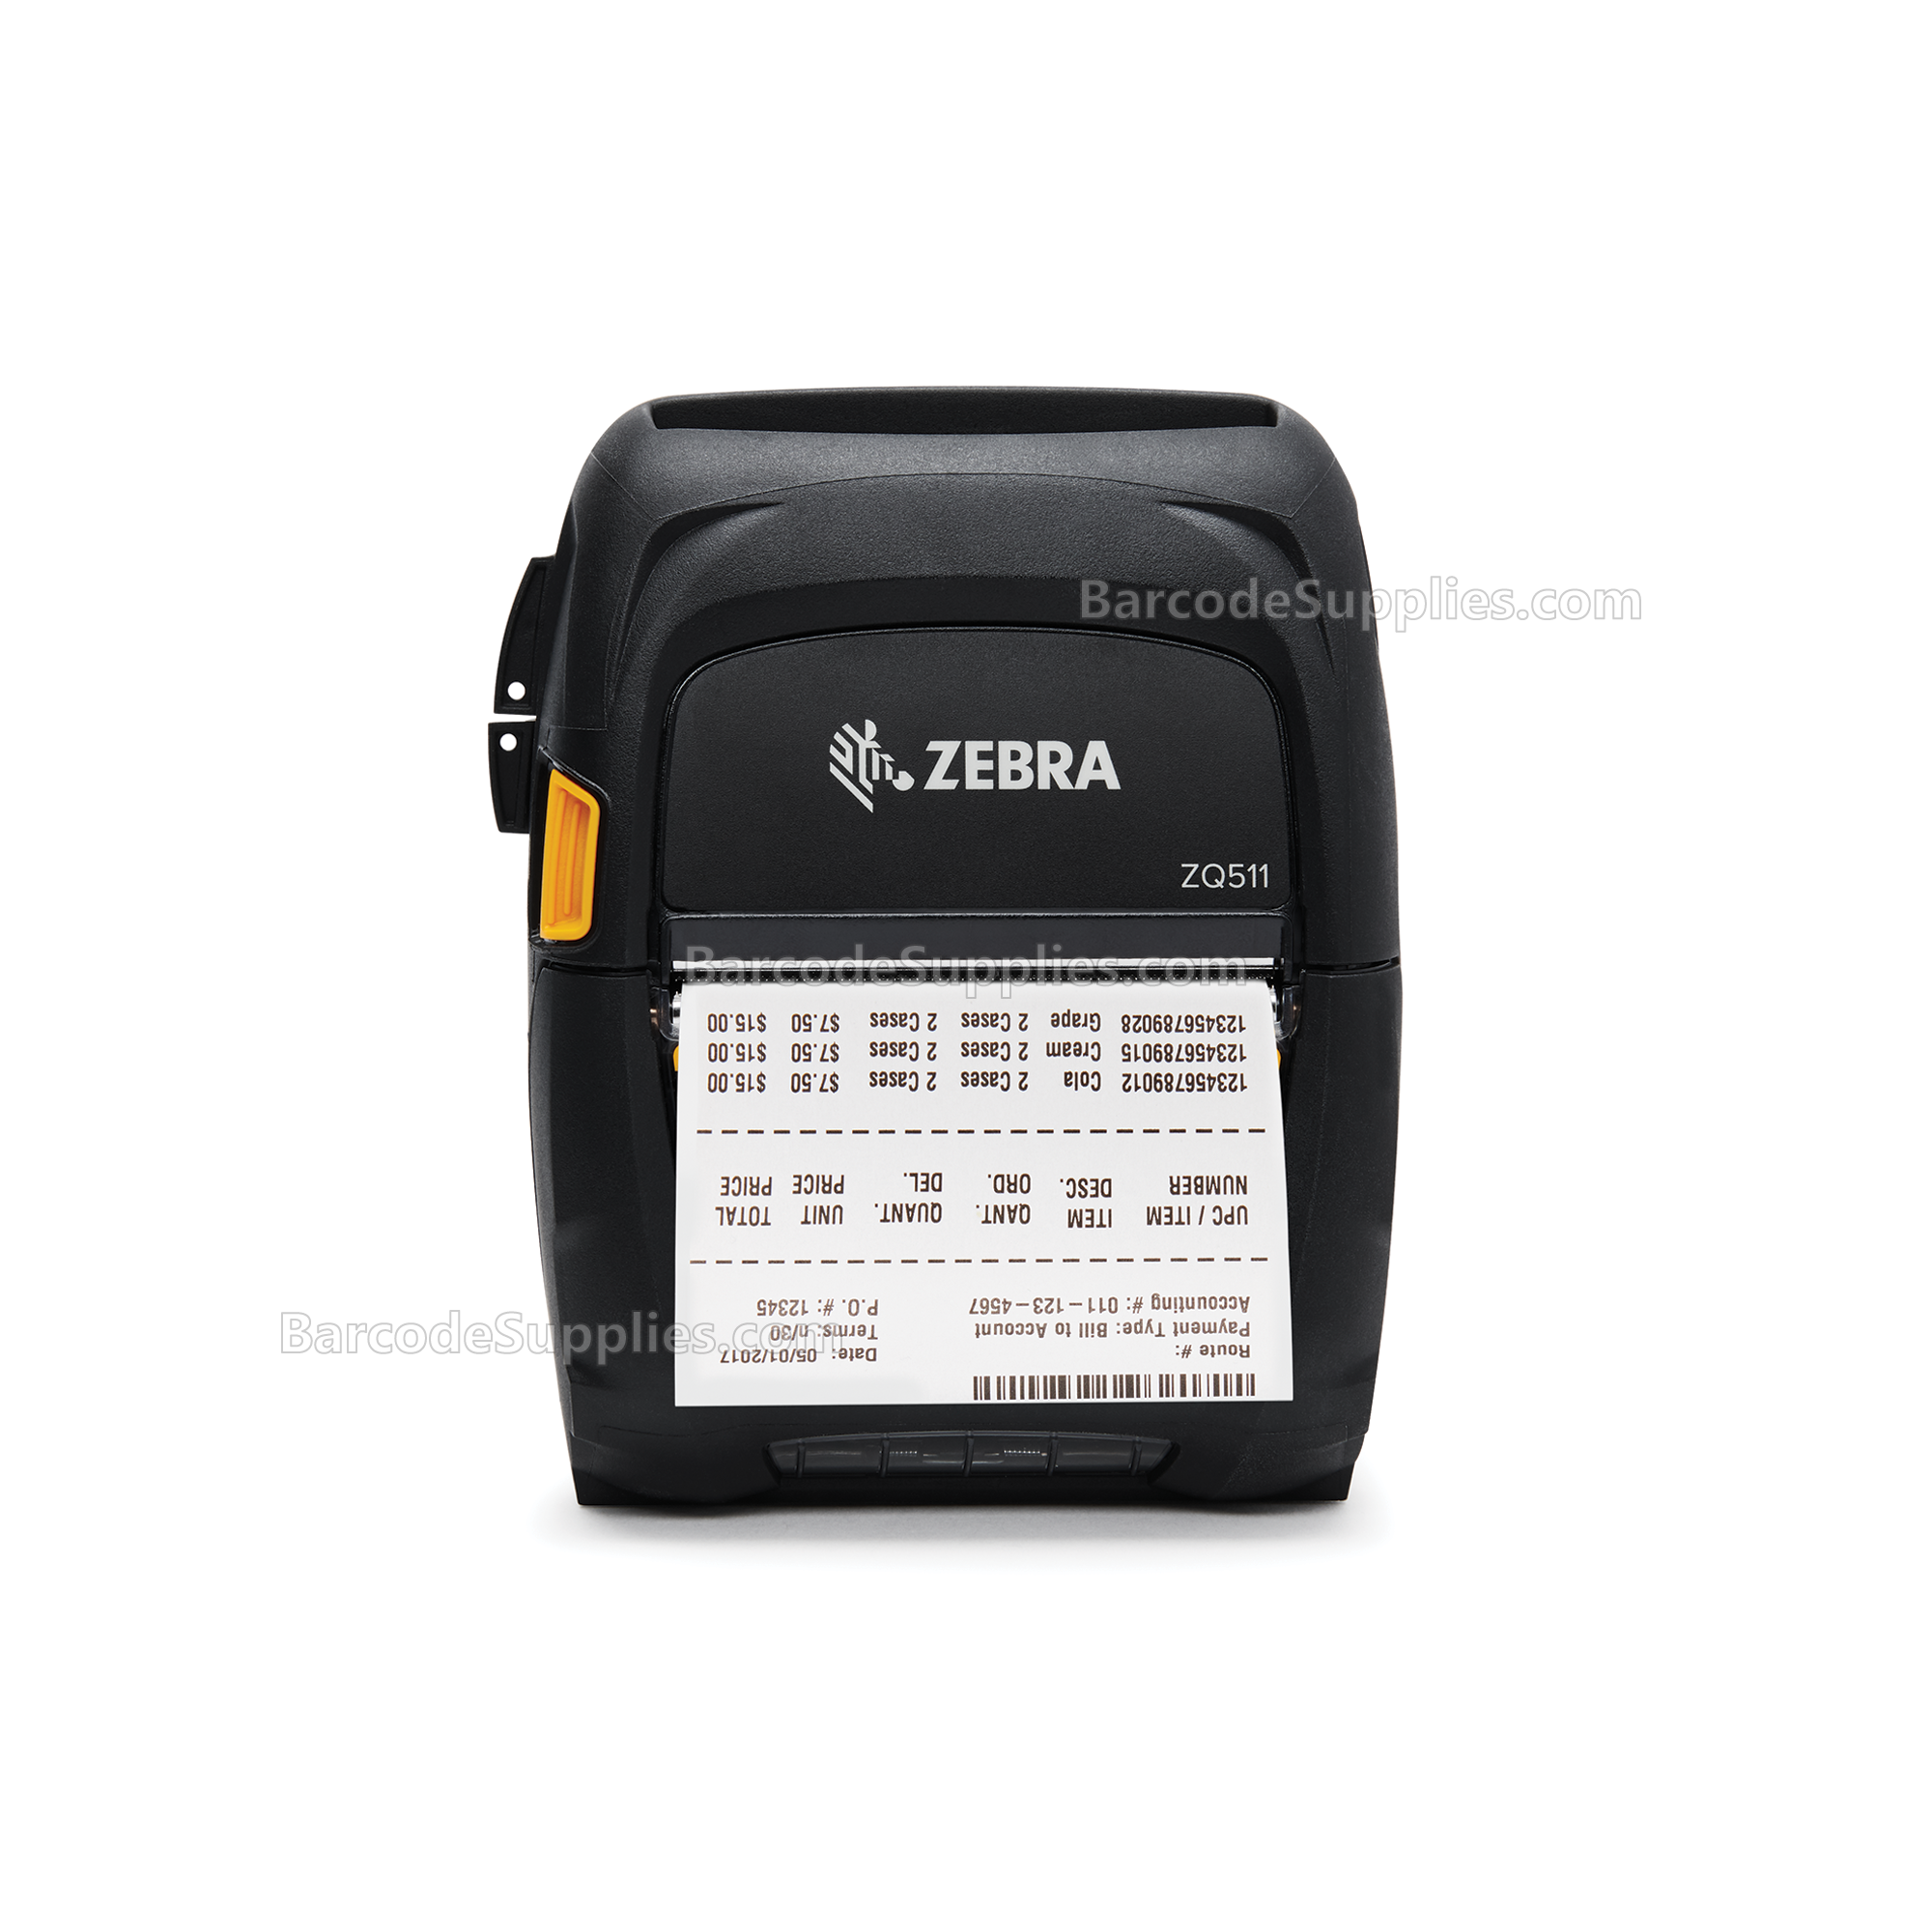 Zebra ZQ511 Mobile Printer - media width 3.15/80mm; English/Latin fonts, Bluetooth 4.1, linerless, stnd battery, US/Canada Certs - MPN: ZQ51-BUE1000-00